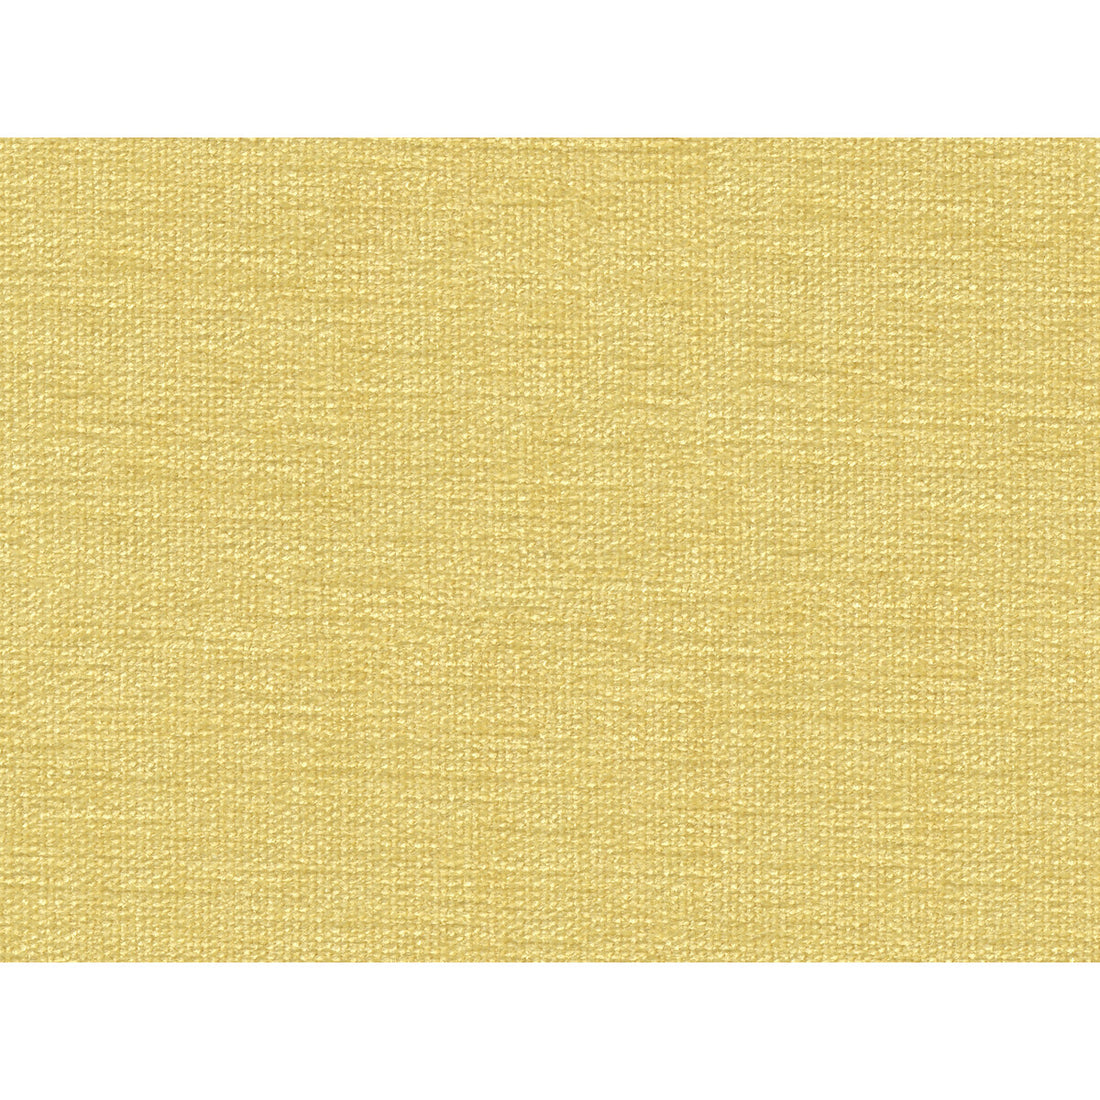 Kravet Smart fabric in 34959-114 color - pattern 34959.114.0 - by Kravet Smart in the Performance Kravetarmor collection